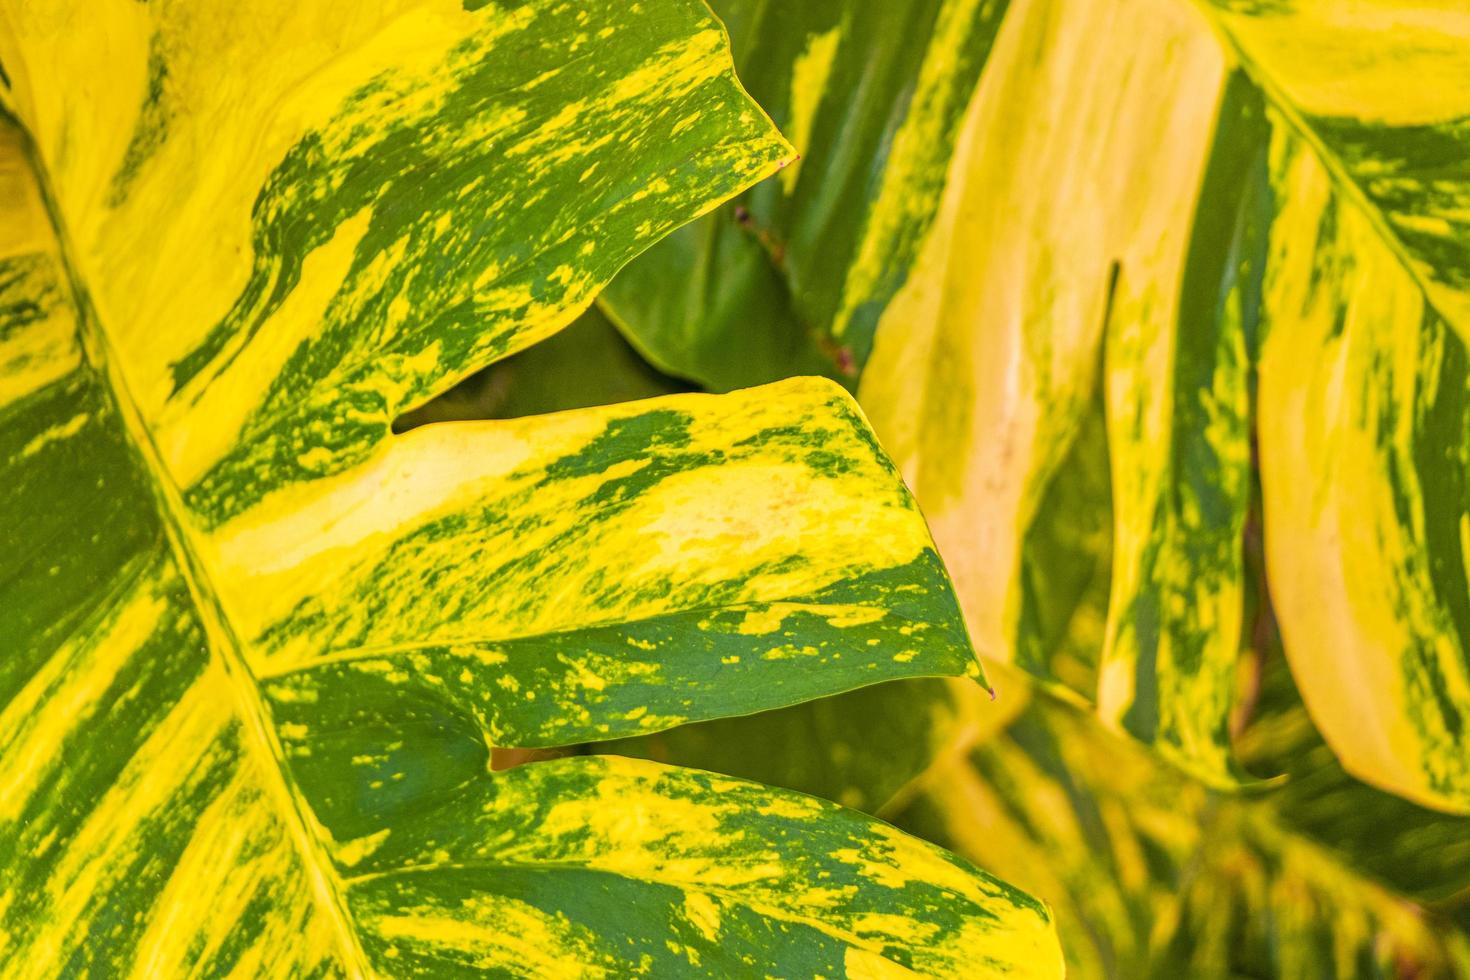 Planta tropical verde y amarilla dieffenbachia dumb cane houseplant mexico. foto